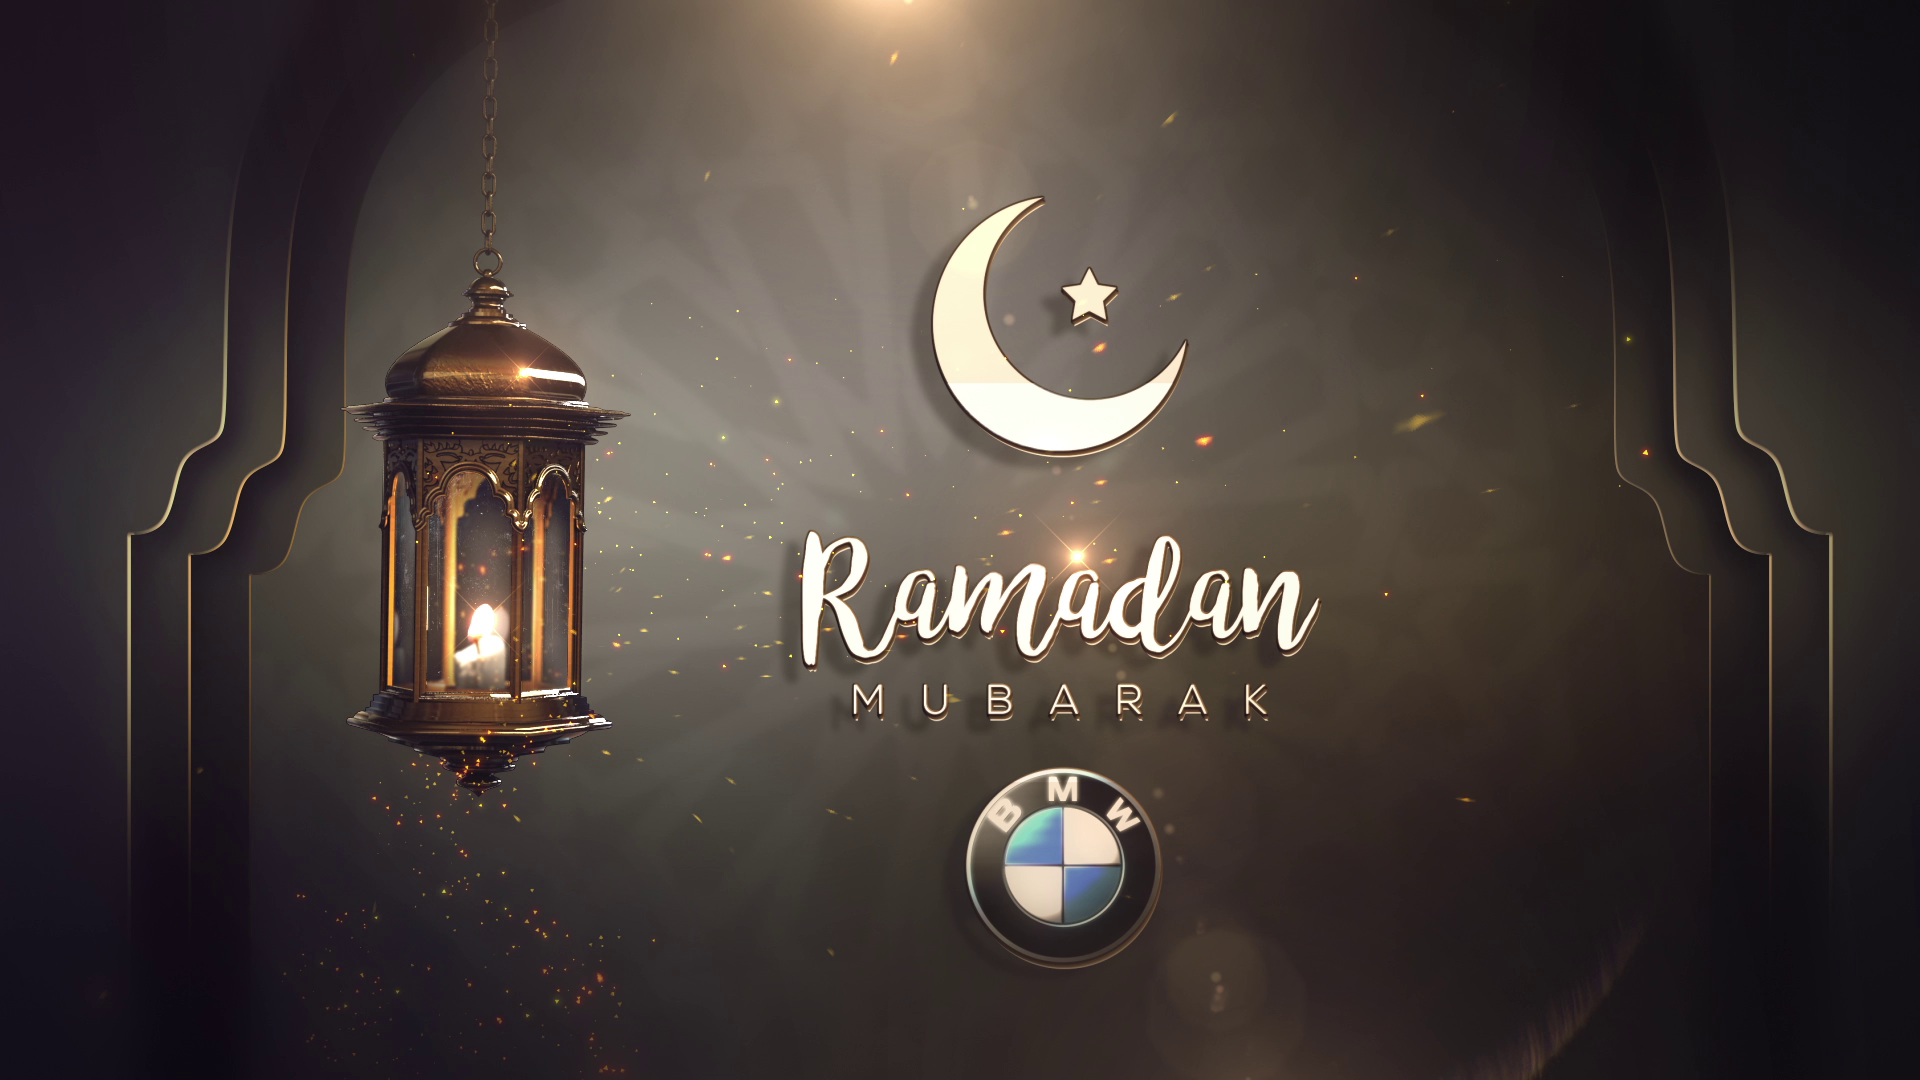 Обои на айфон рамадан. Рамазан мубарак. Рамазан Eid Mubarak. Рамадан 2021 мубарак. Рамадан фон.